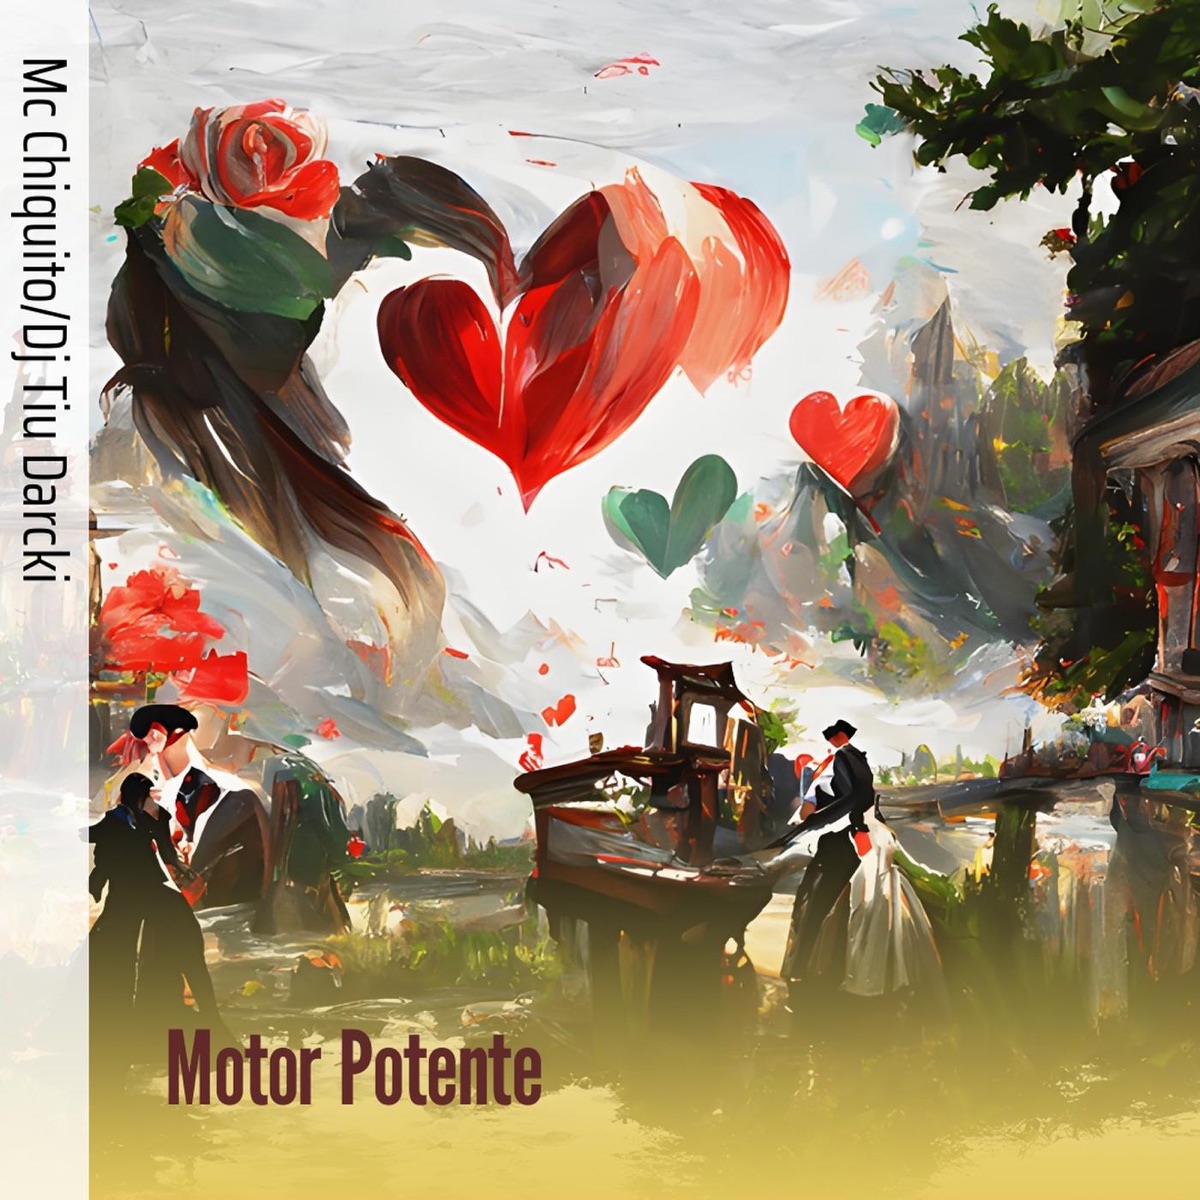 Motor Potente - Single - Album by MC CHIQUITO & Dj Tiu Darcki - Apple Music